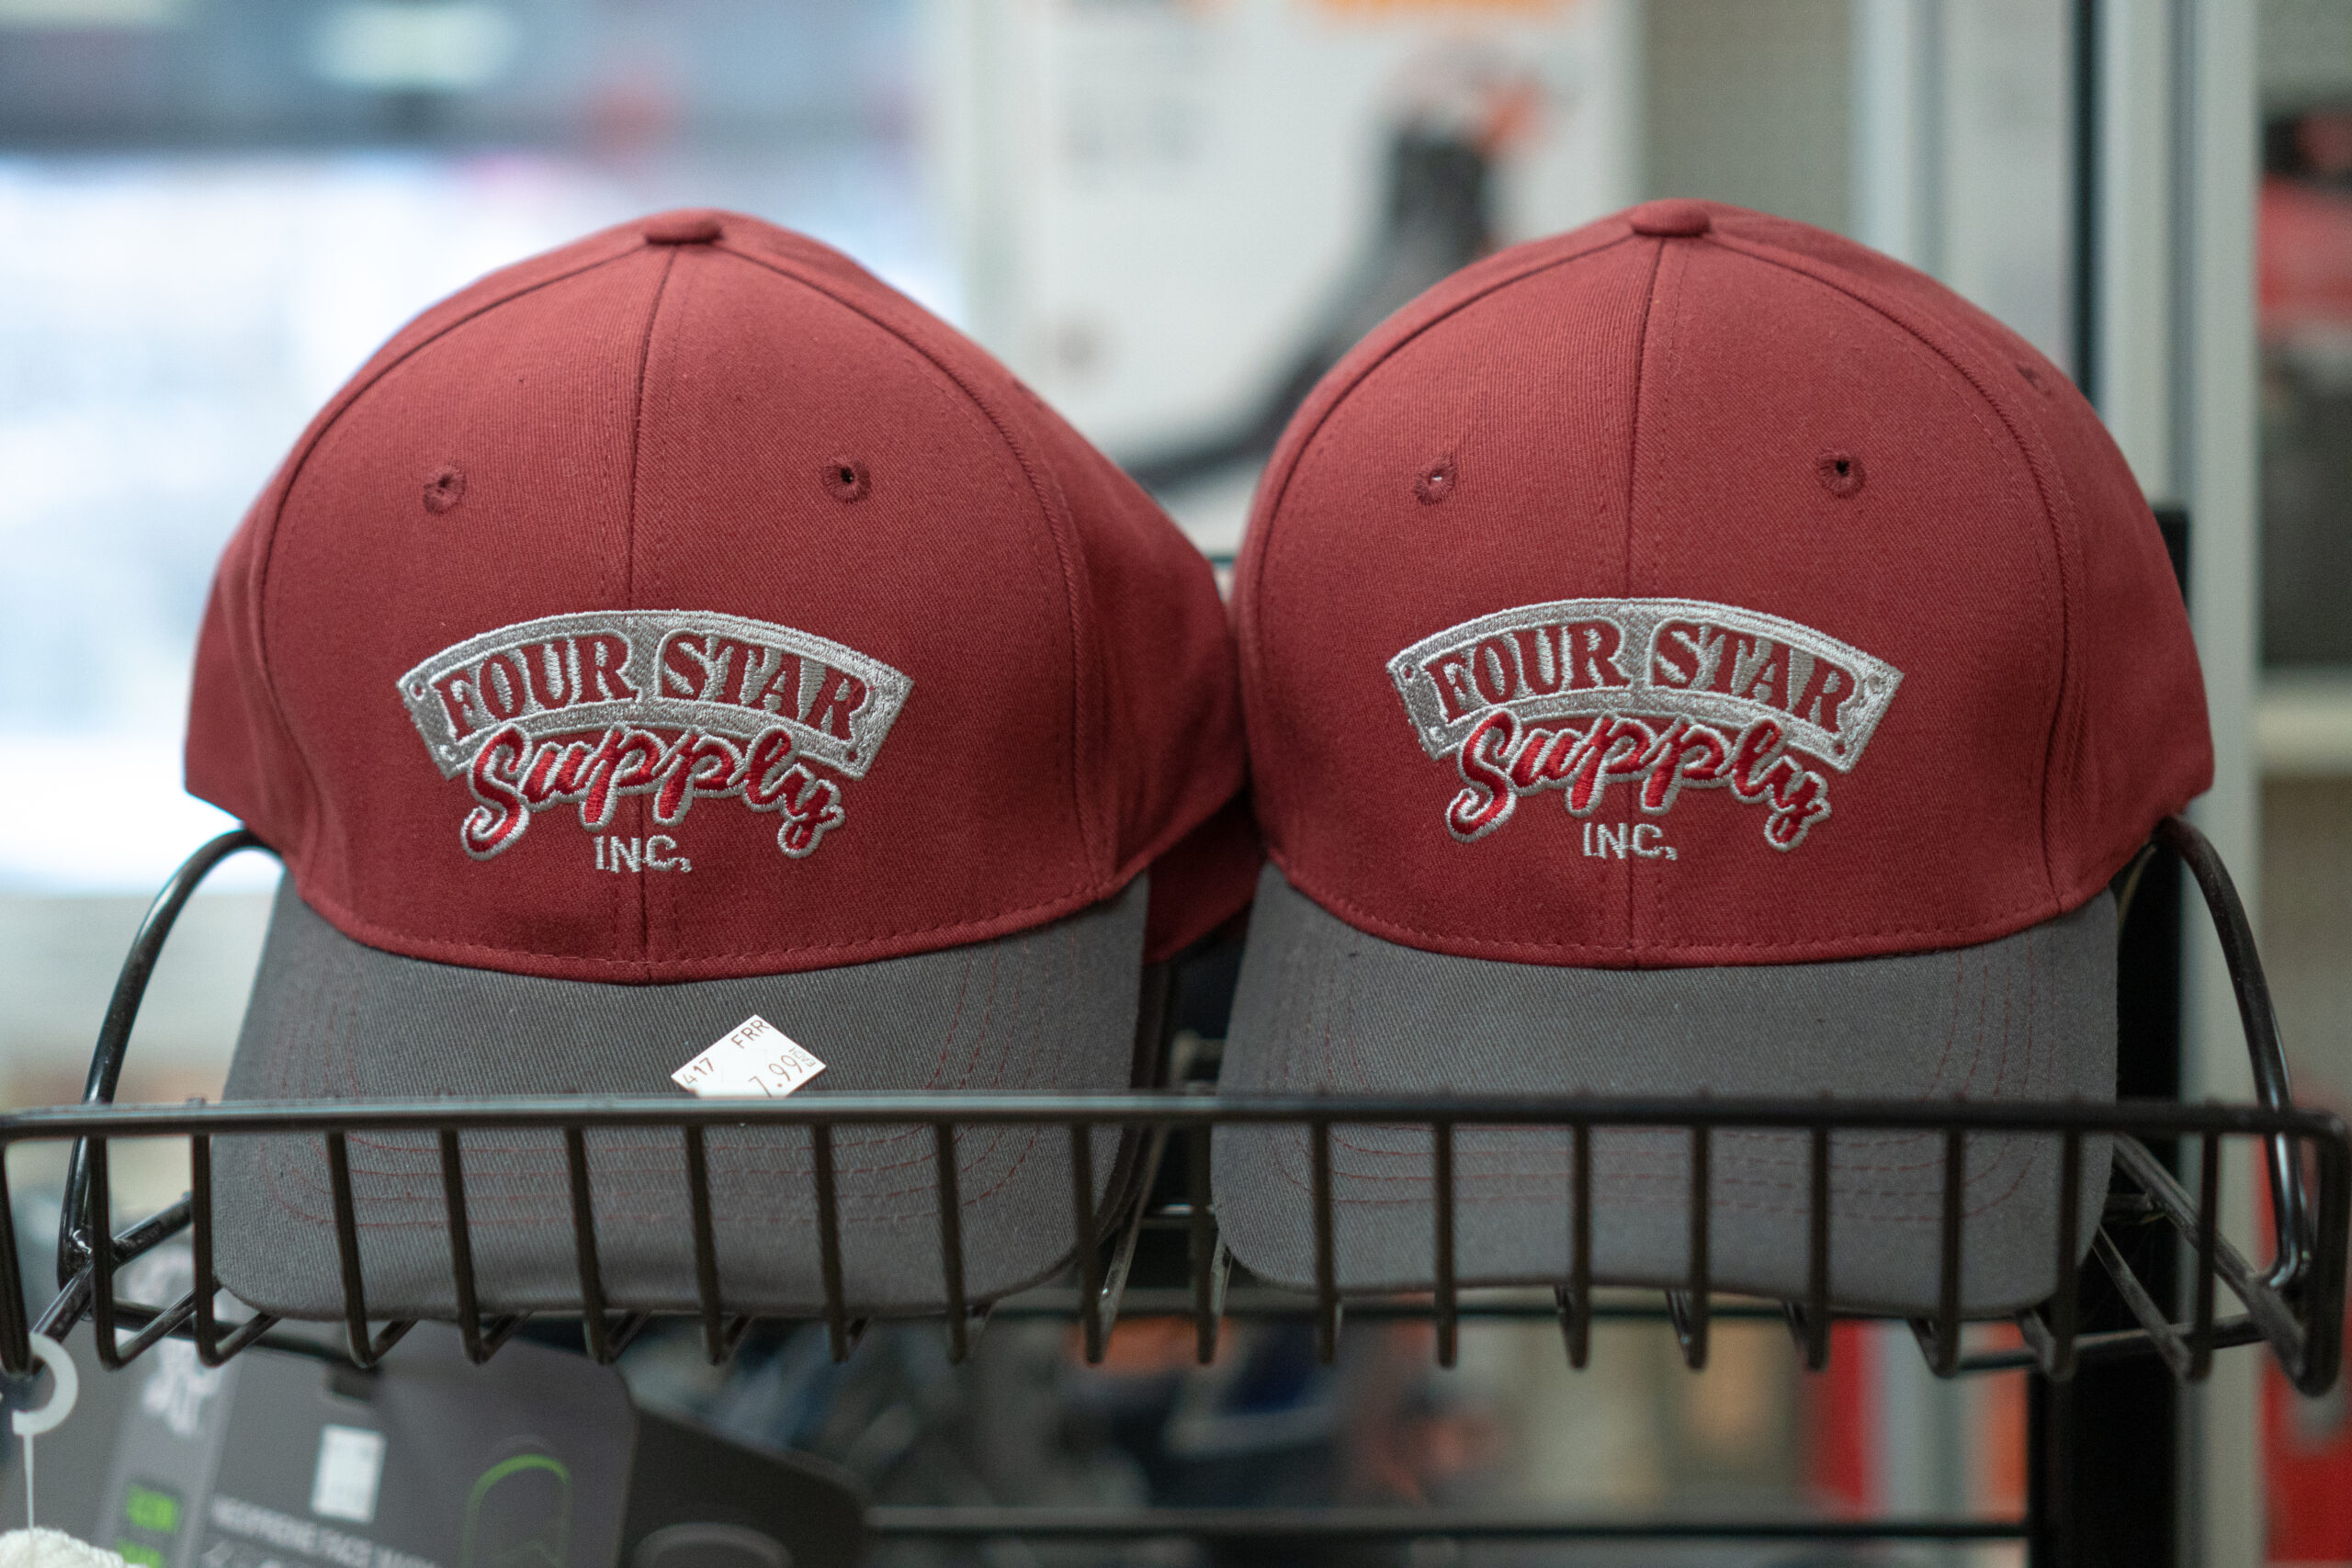 Four Star Supply brand baseball caps